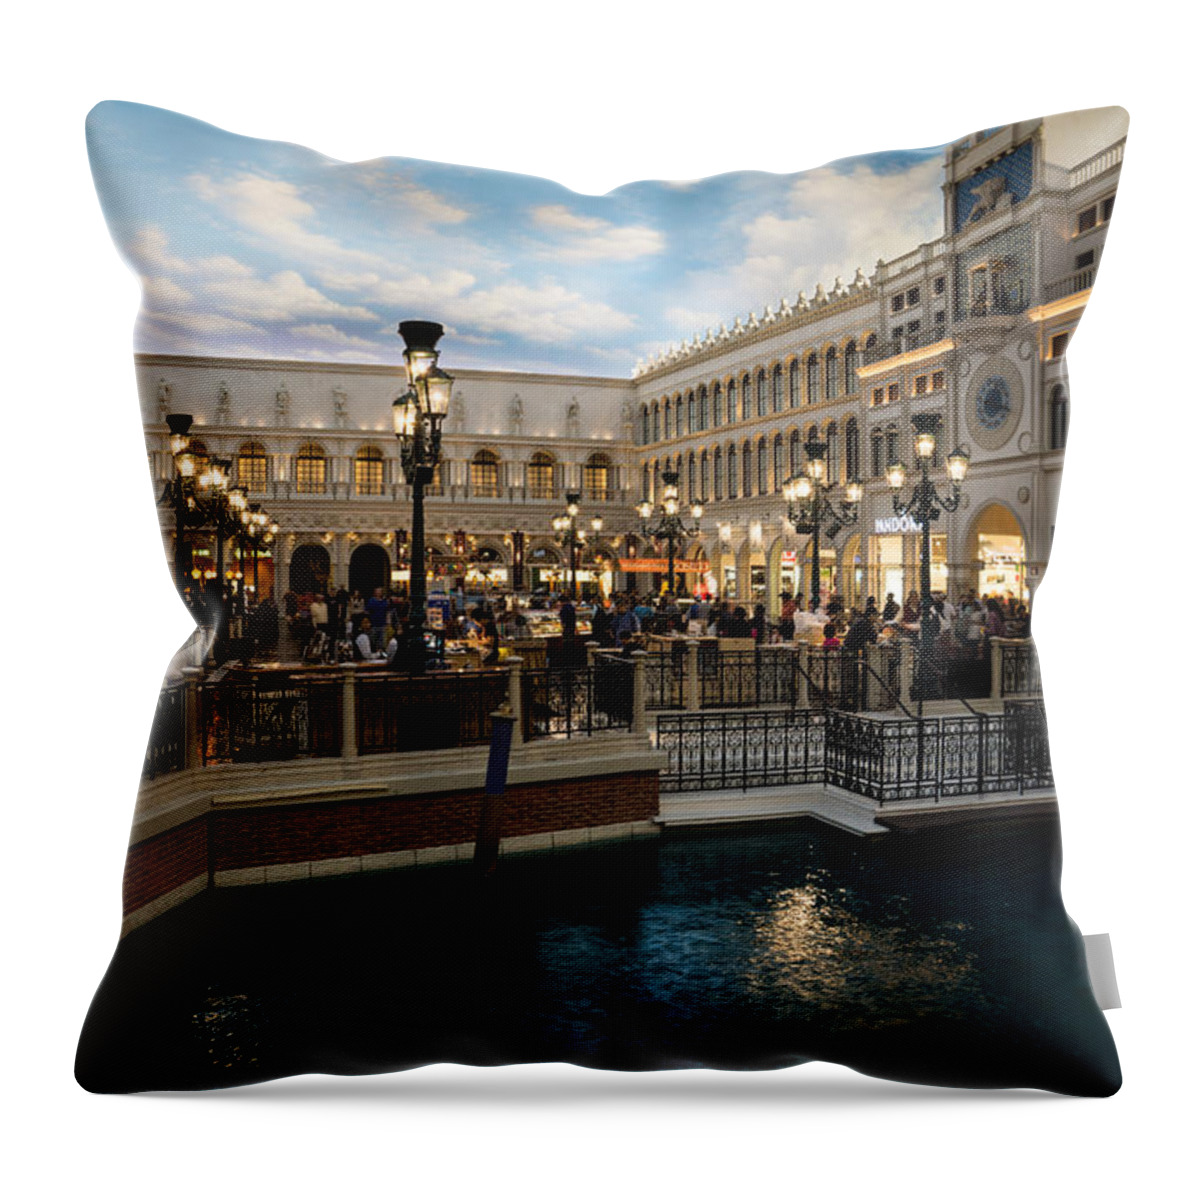 Venetian Canal Throw Pillow featuring the photograph It's Not Venice by Georgia Mizuleva